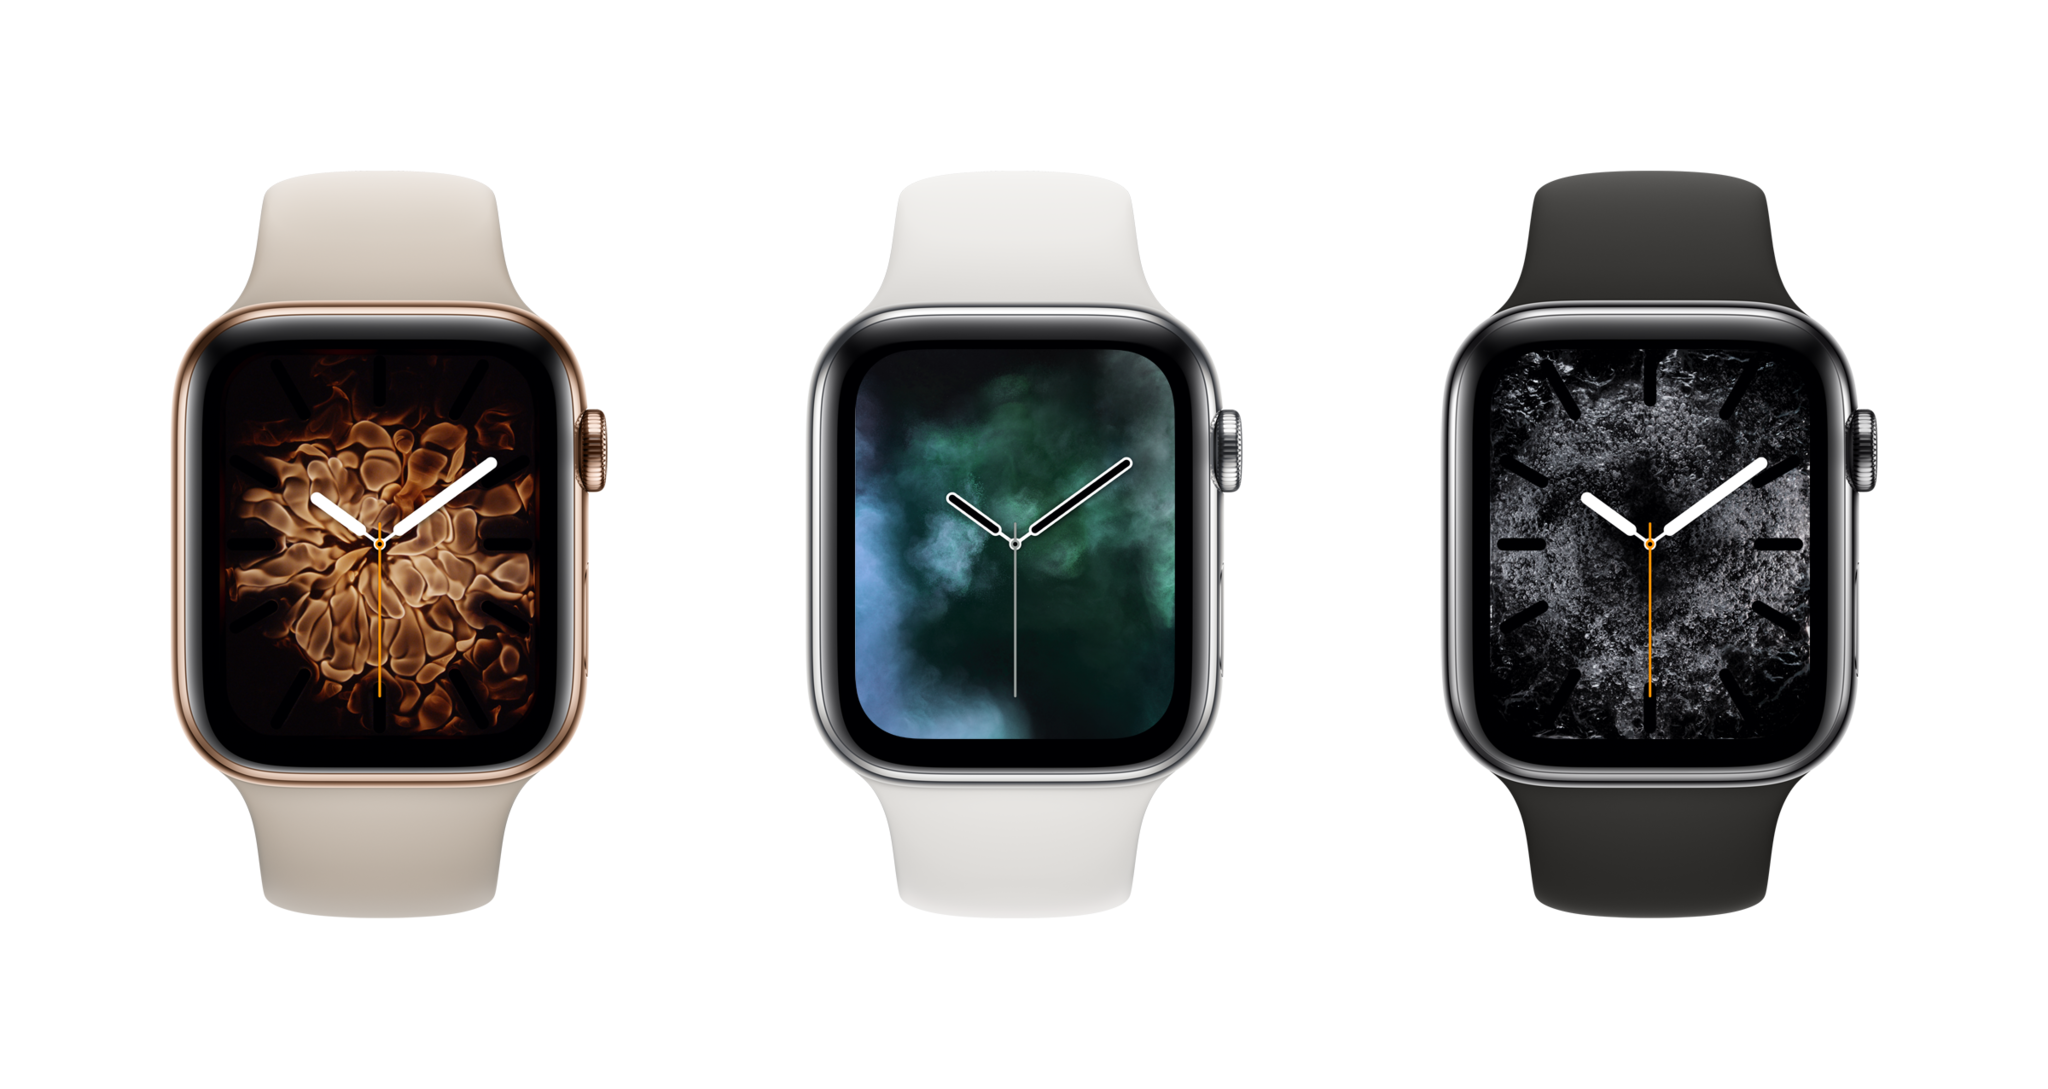 Apple watch титан. Apple watch Series 4. Apple watch 3 LTE. Apple watch Series 4 цвета. Apple watch 4 44mm Ceramic.